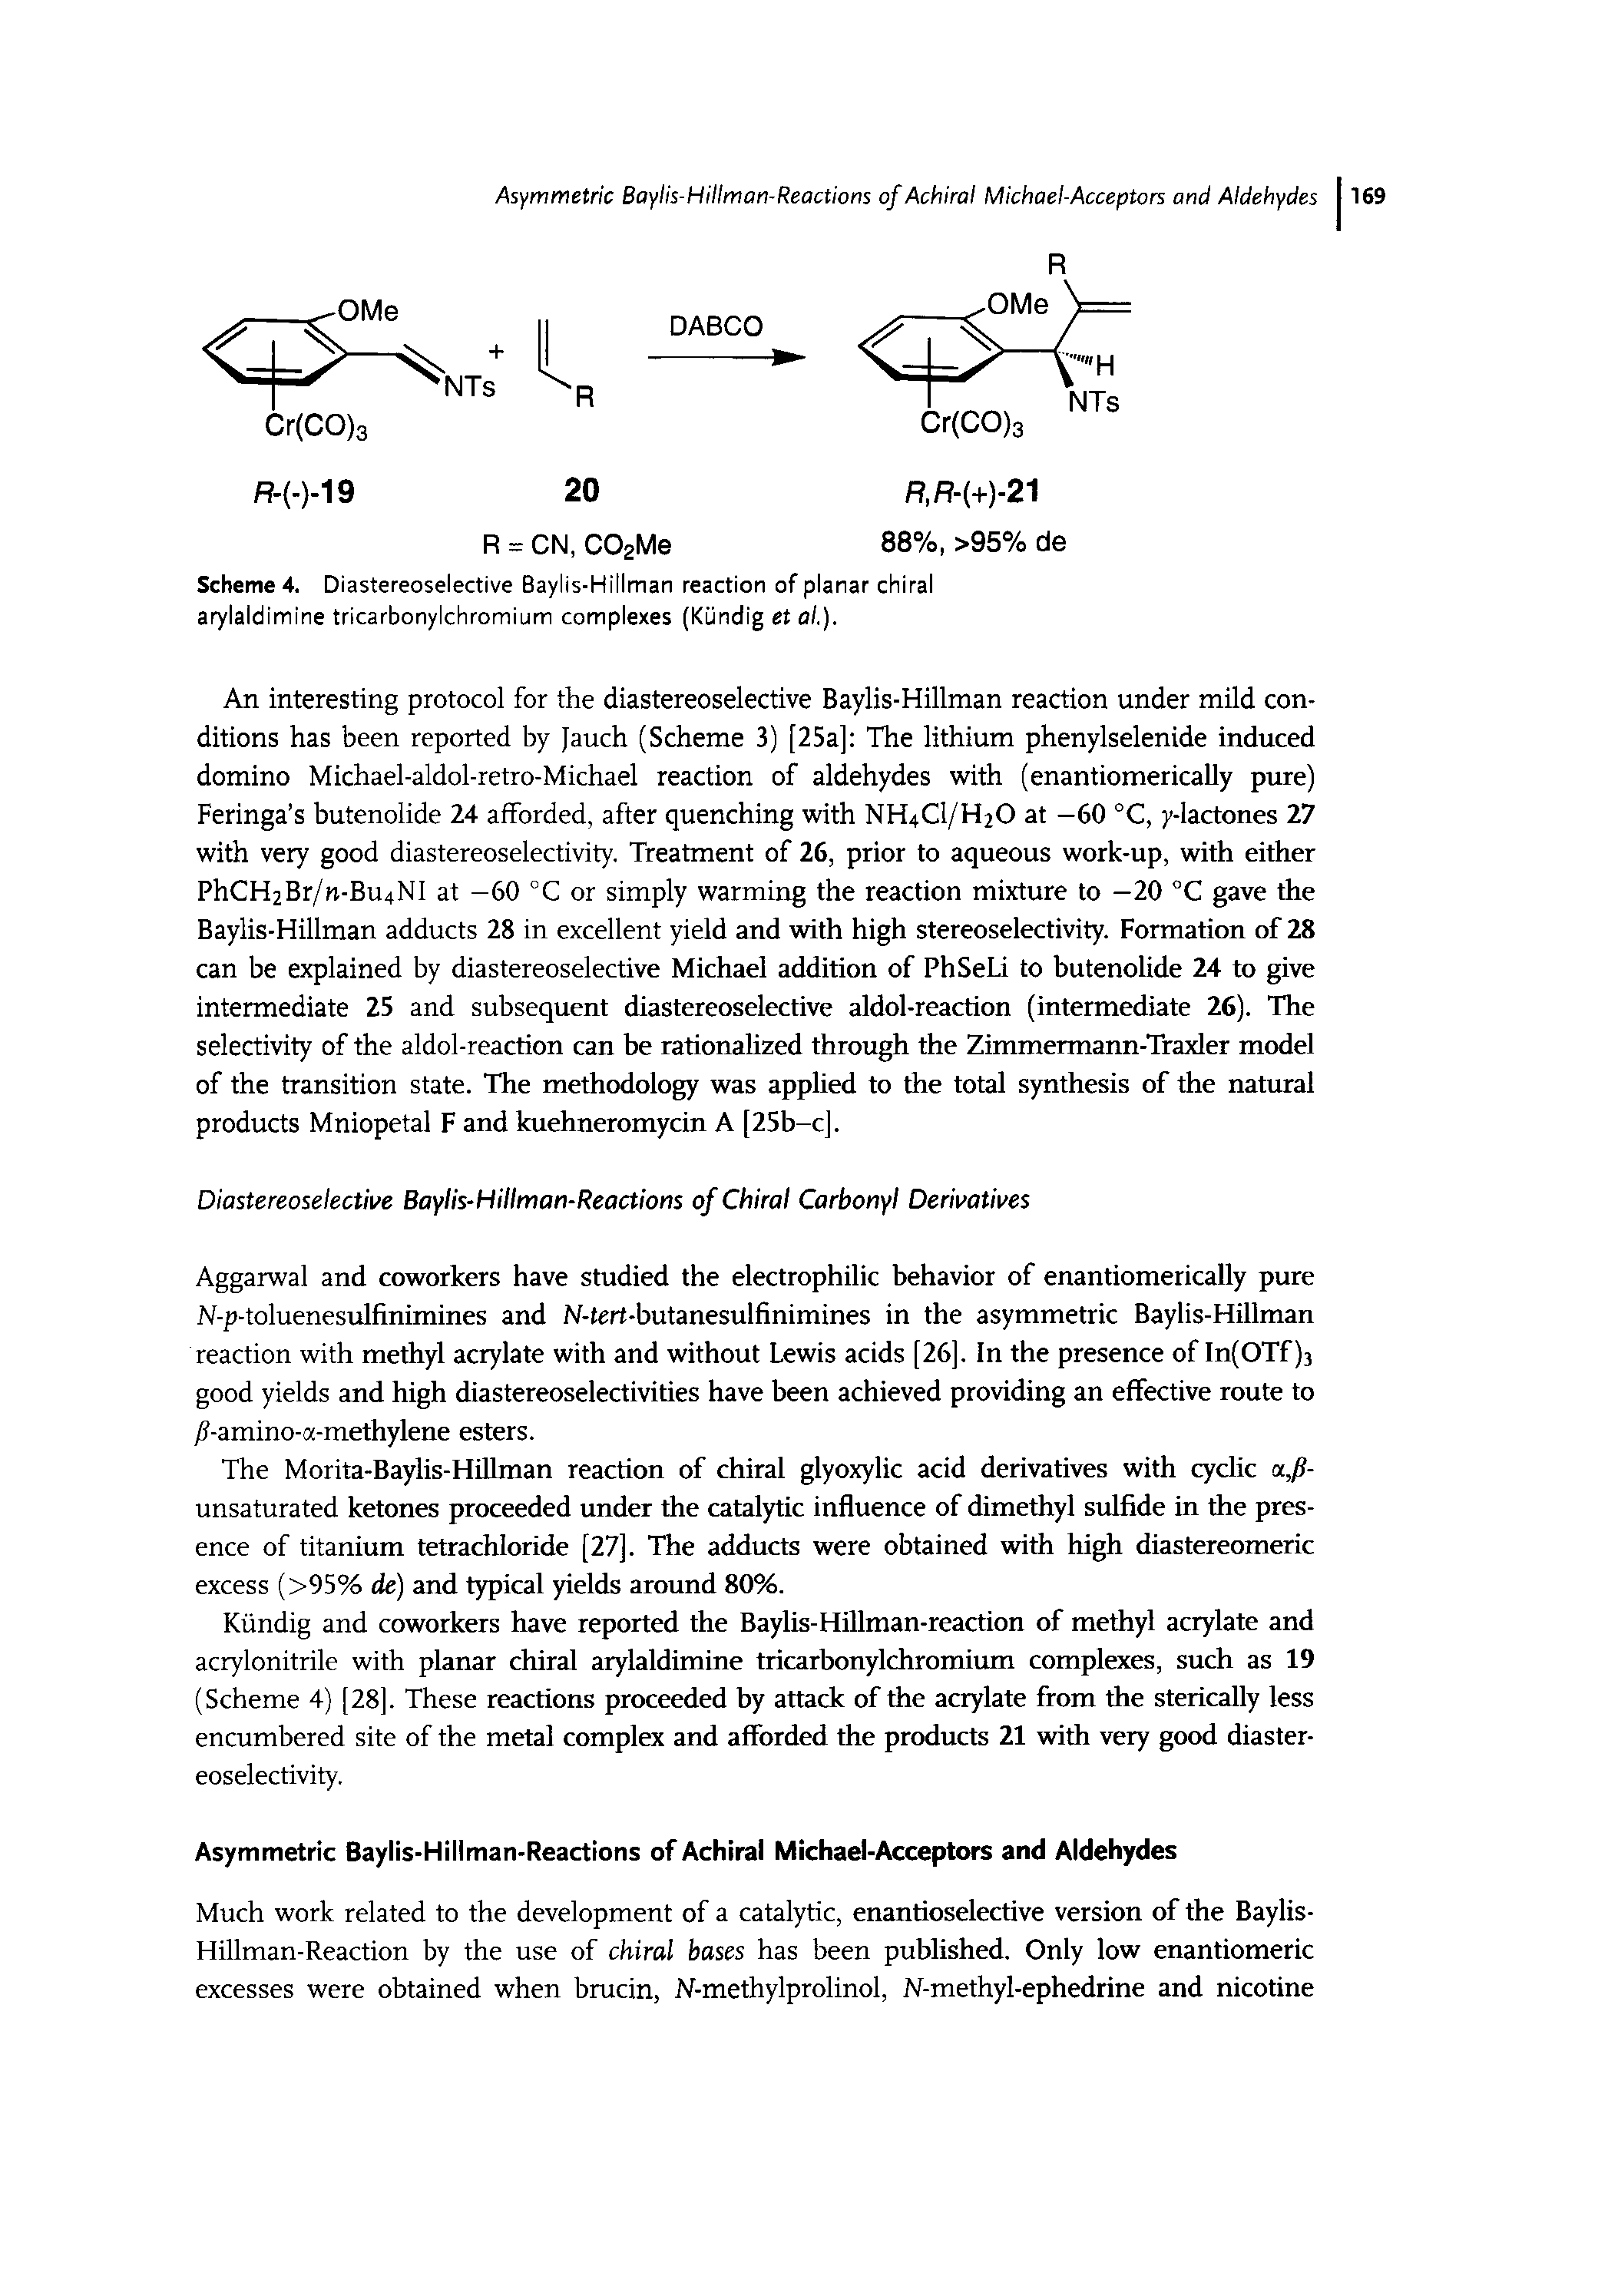 Scheme 4. Diastereoselective Baylis-Hillman reaction of planar chiral arylaldimine tricarbonylchromium complexes (Kundig et ai.).